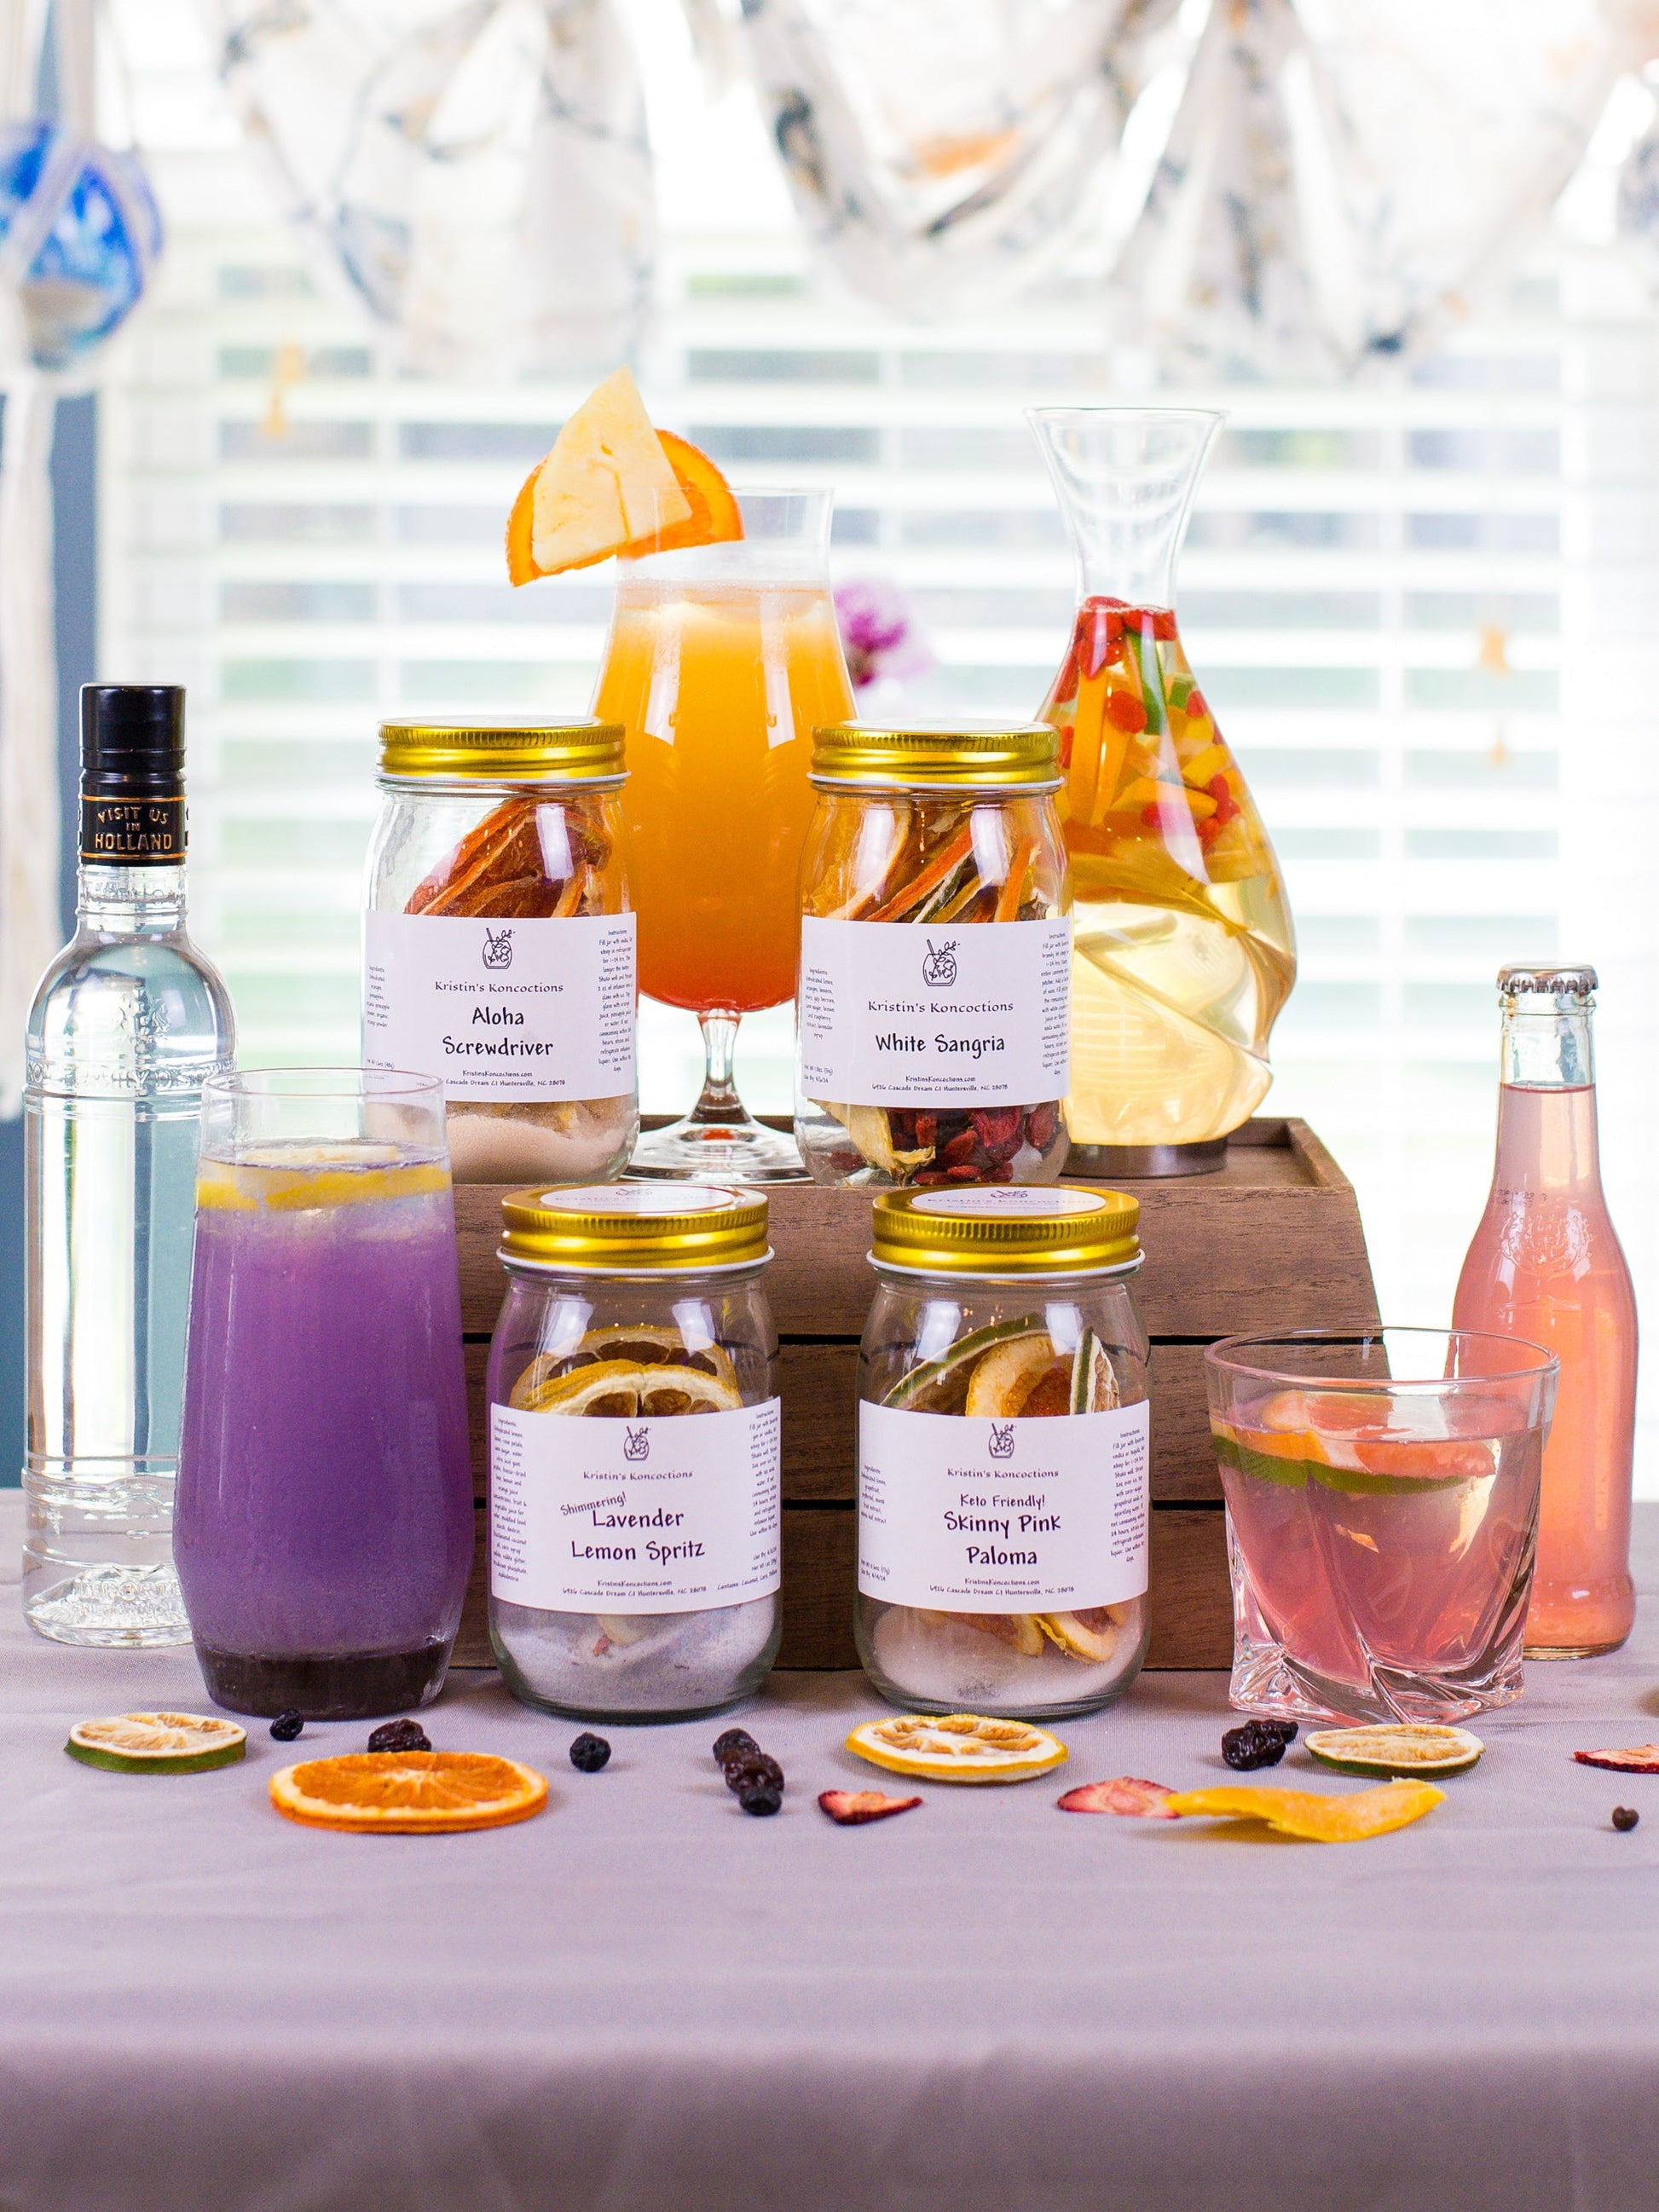 Stocking Stuffers Ideas - Mixy Craft Cocktail Jars – Nova Candle Co.